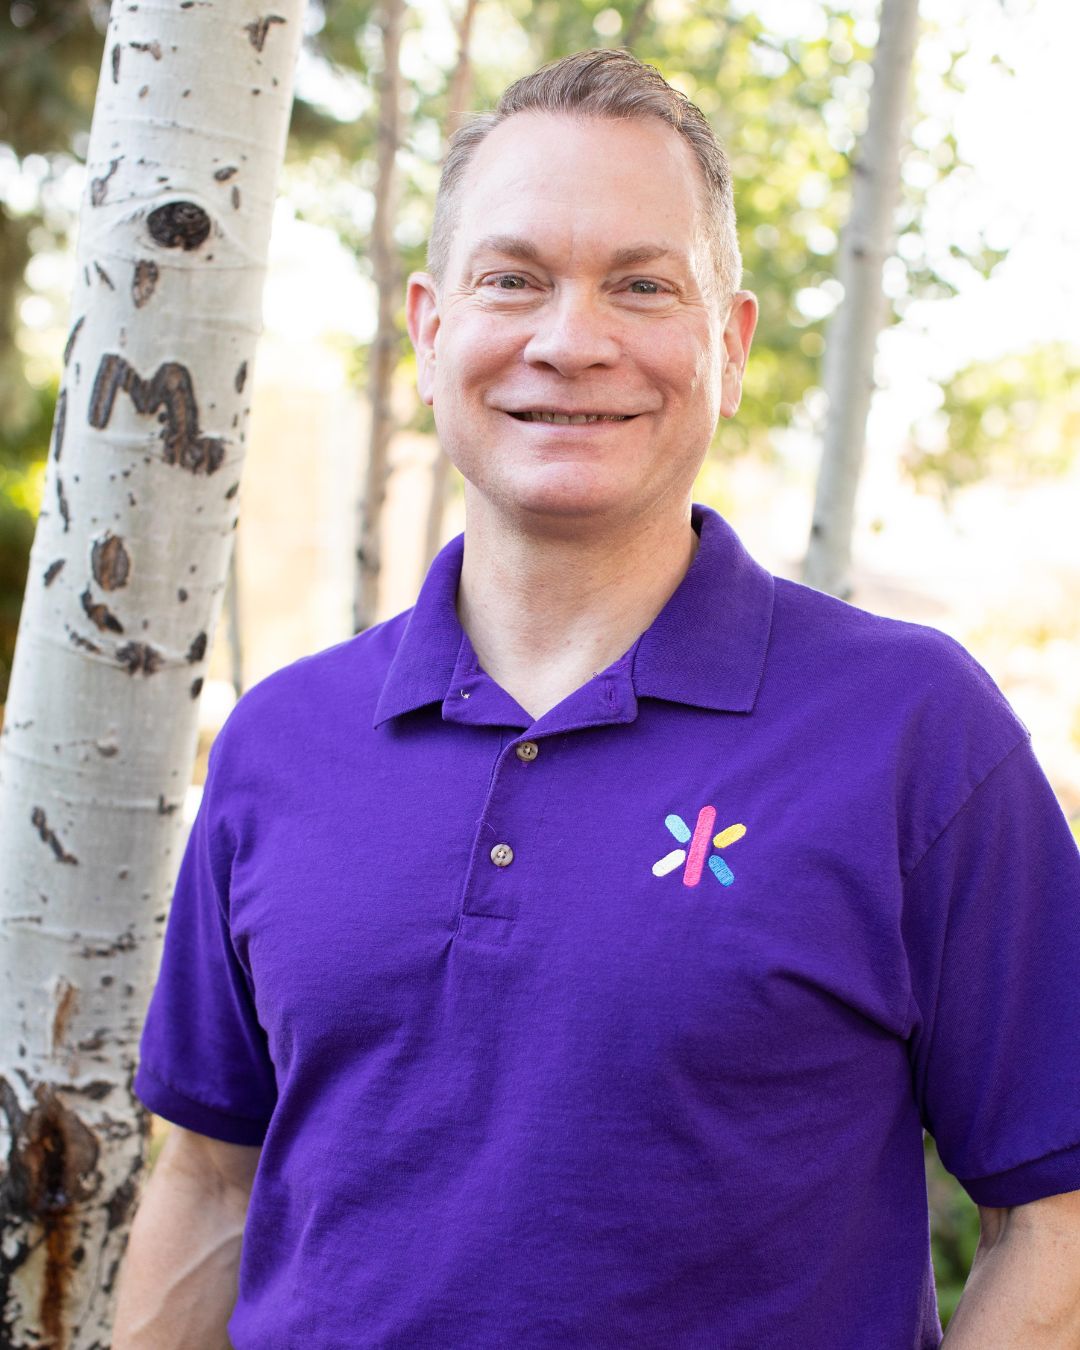 Picture of Ken Kilday Wearing Purple Leader's Cut Shirt